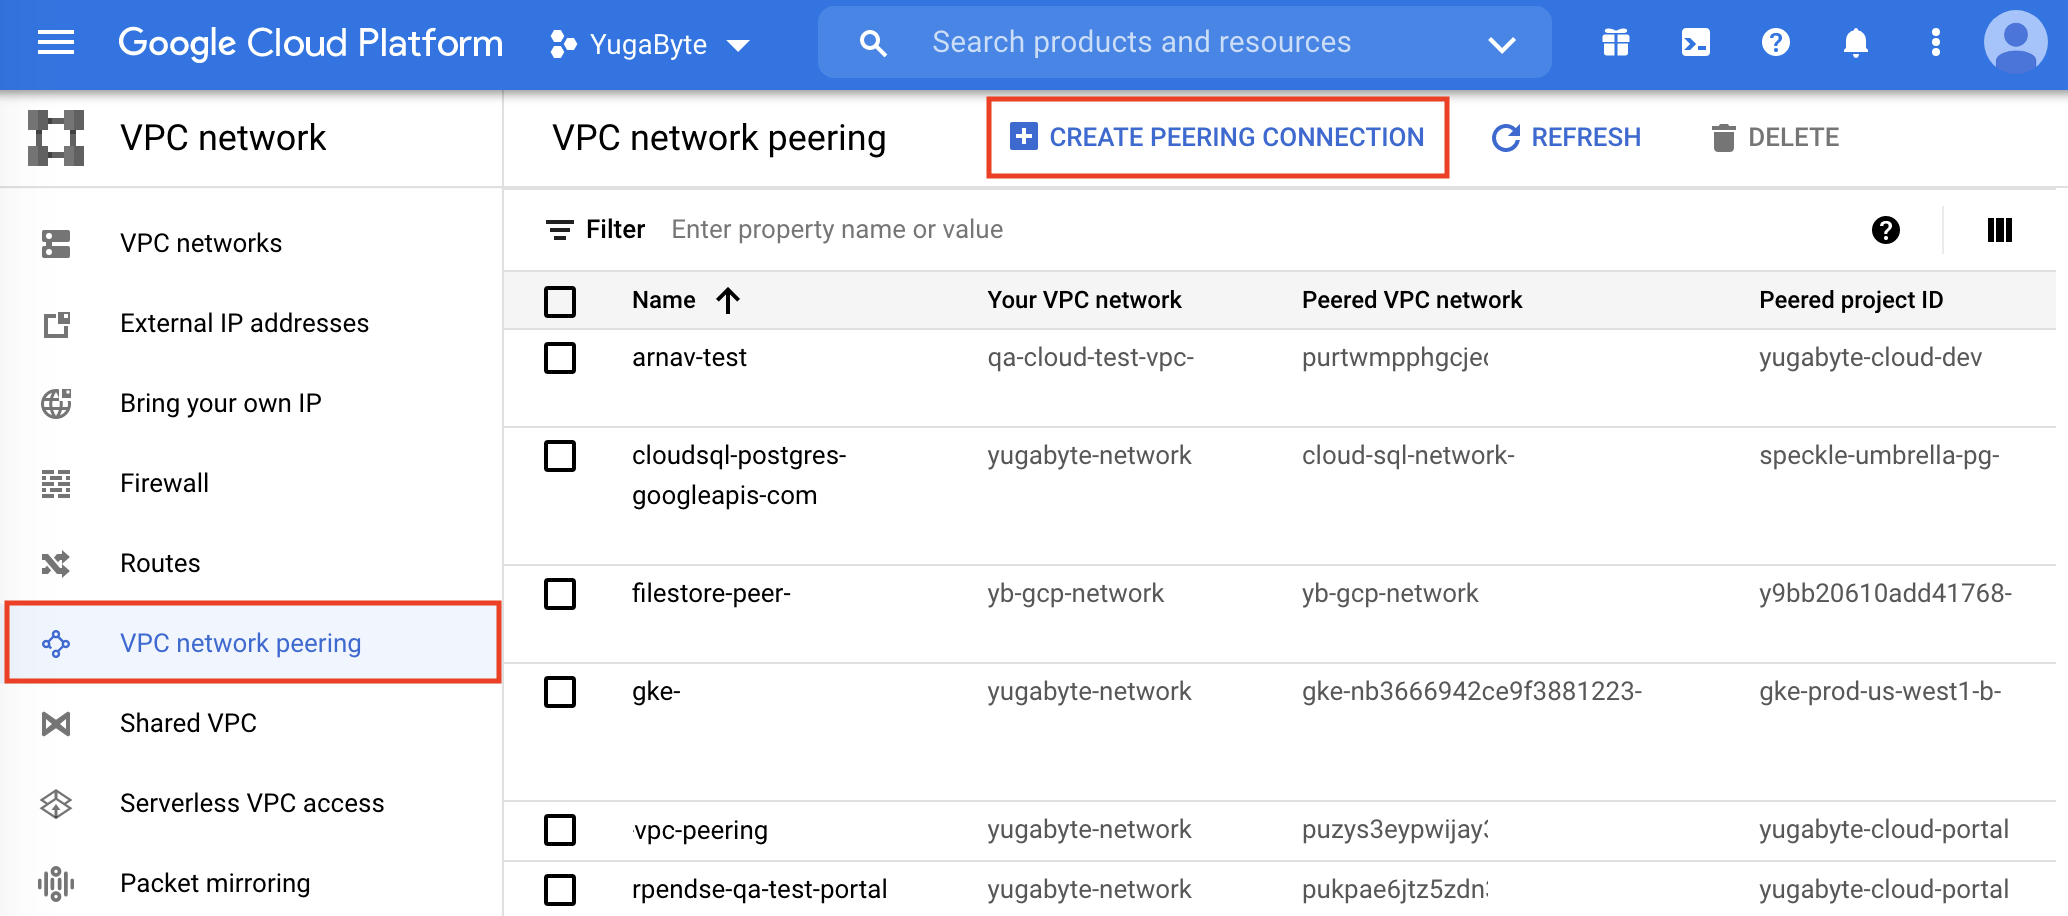 VPC network peering in GCP